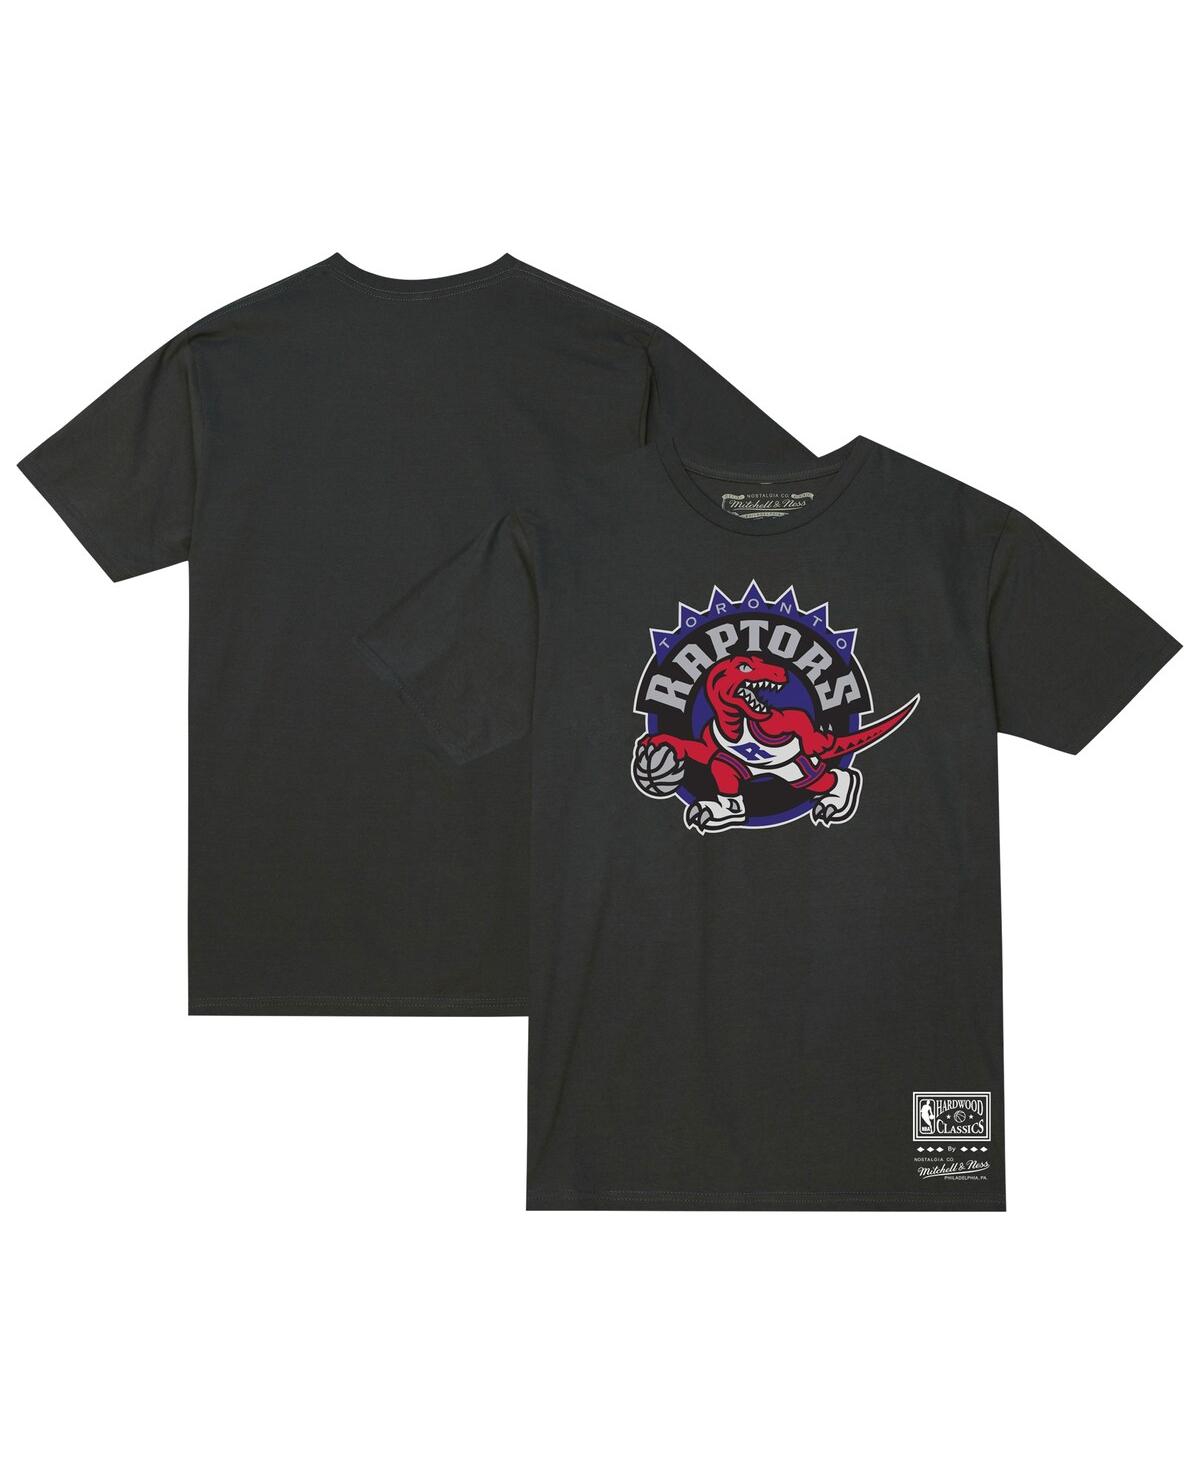 Men's and Women's Mitchell & Ness Black Toronto Raptors Hardwood Classics Mvp Throwback Logo T-shirt - Black